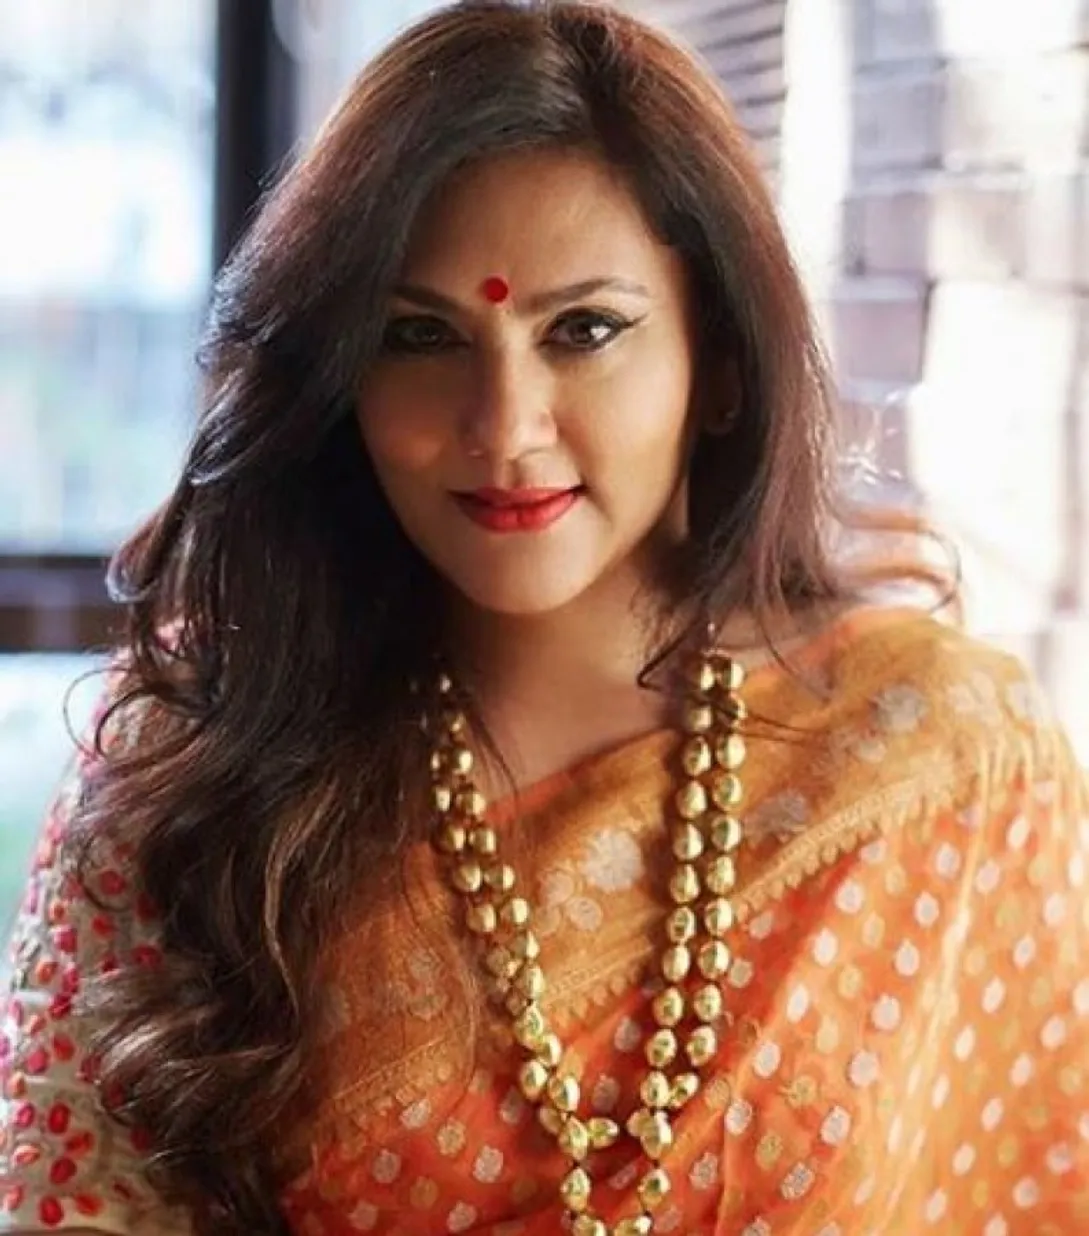 Deepika Chikhalia went to receive award wearing saree | NewsTrack English 1